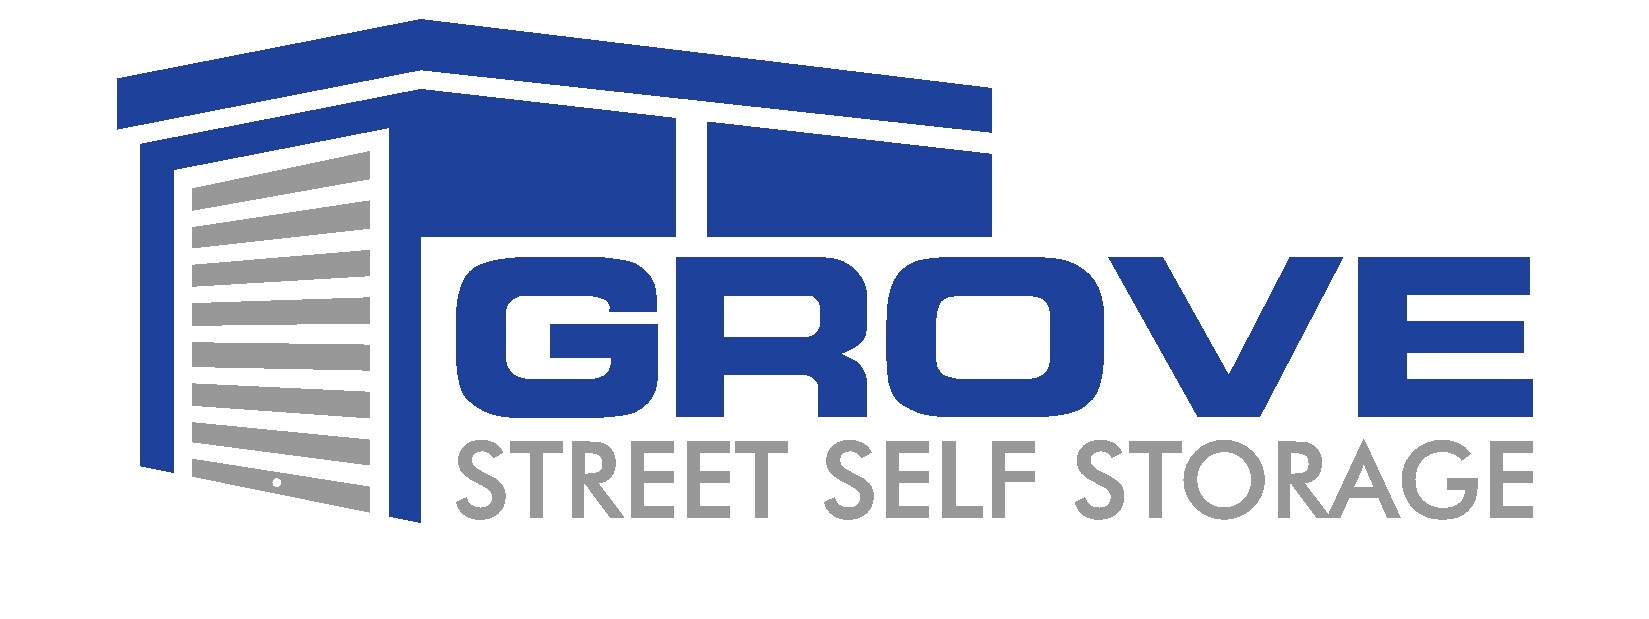 Grove Street Self Storage Logo resize